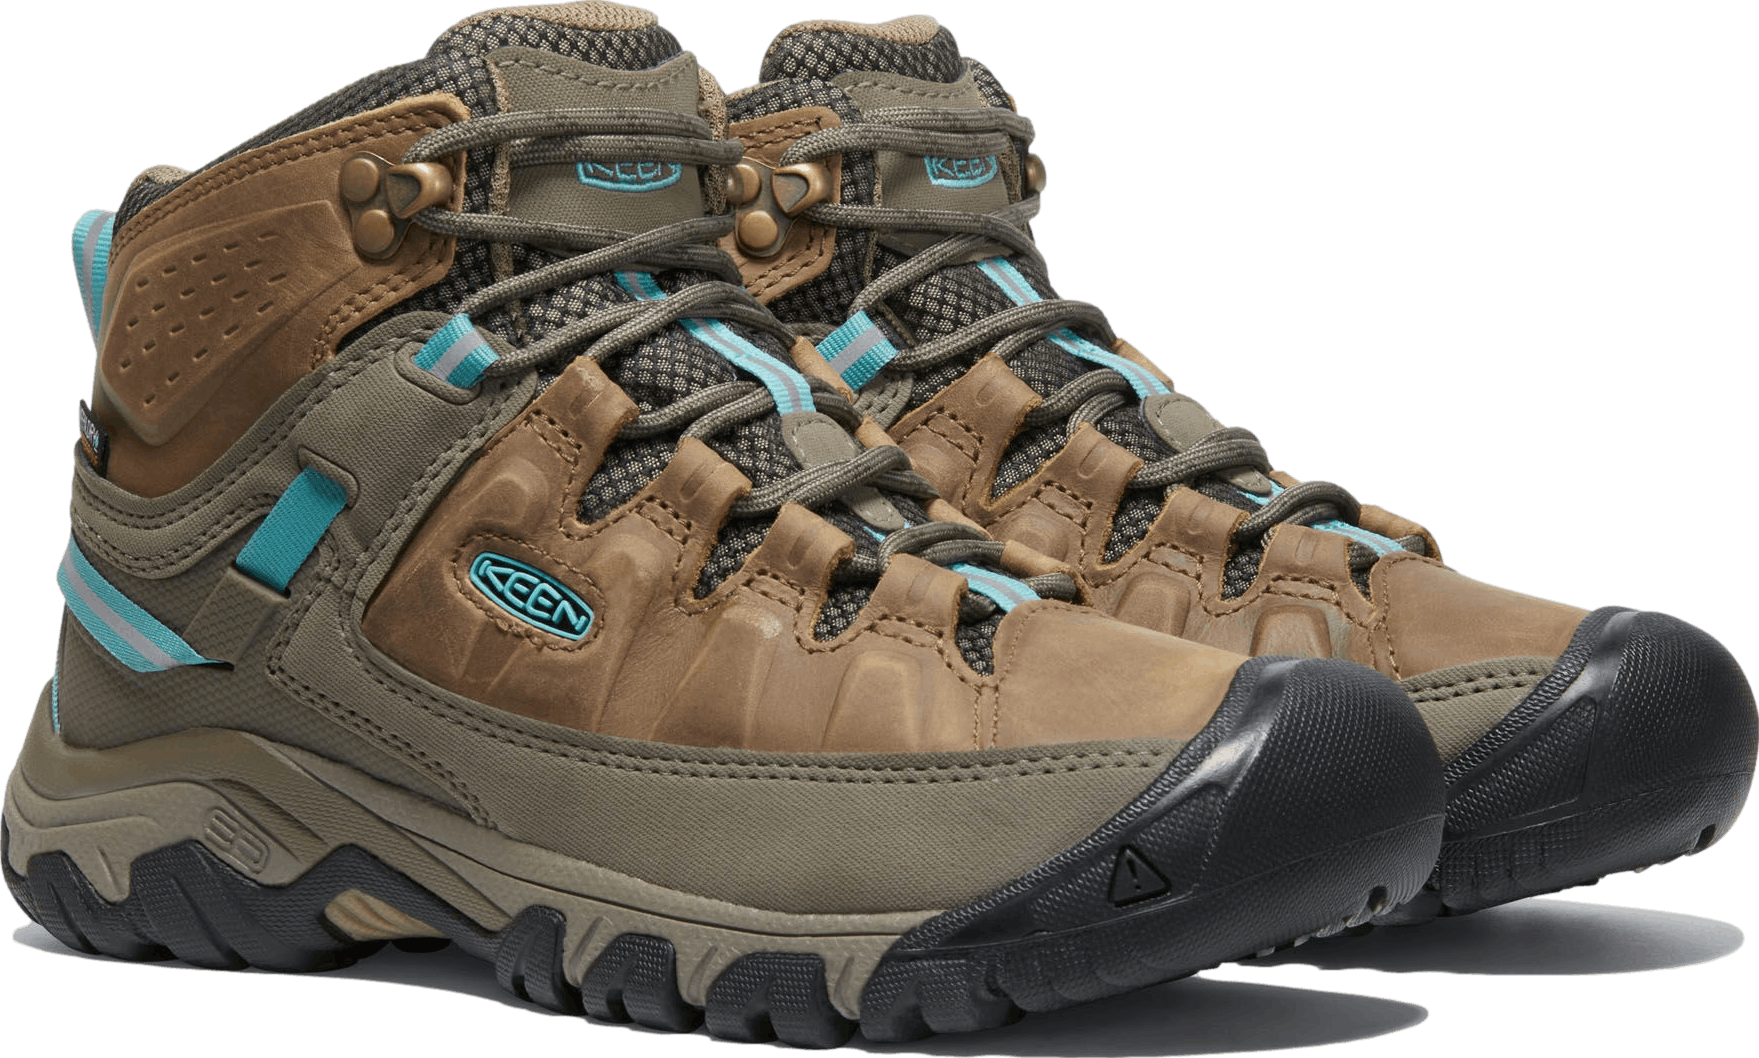 KEEN Women's Targhee III Waterproof Mid Hiking Boots